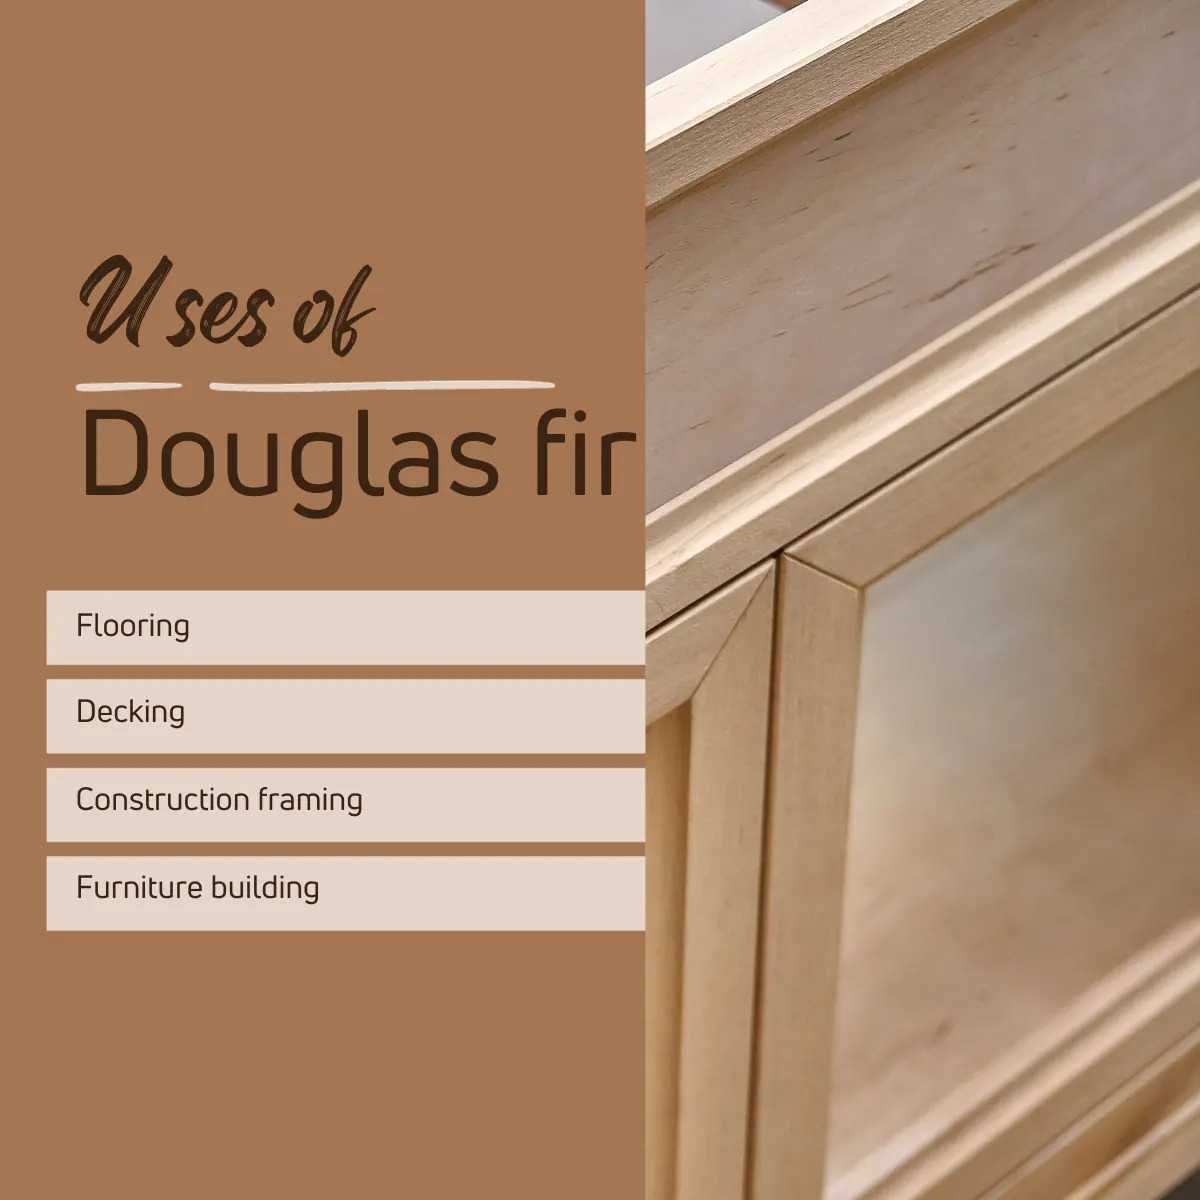 Uses of Douglas fir